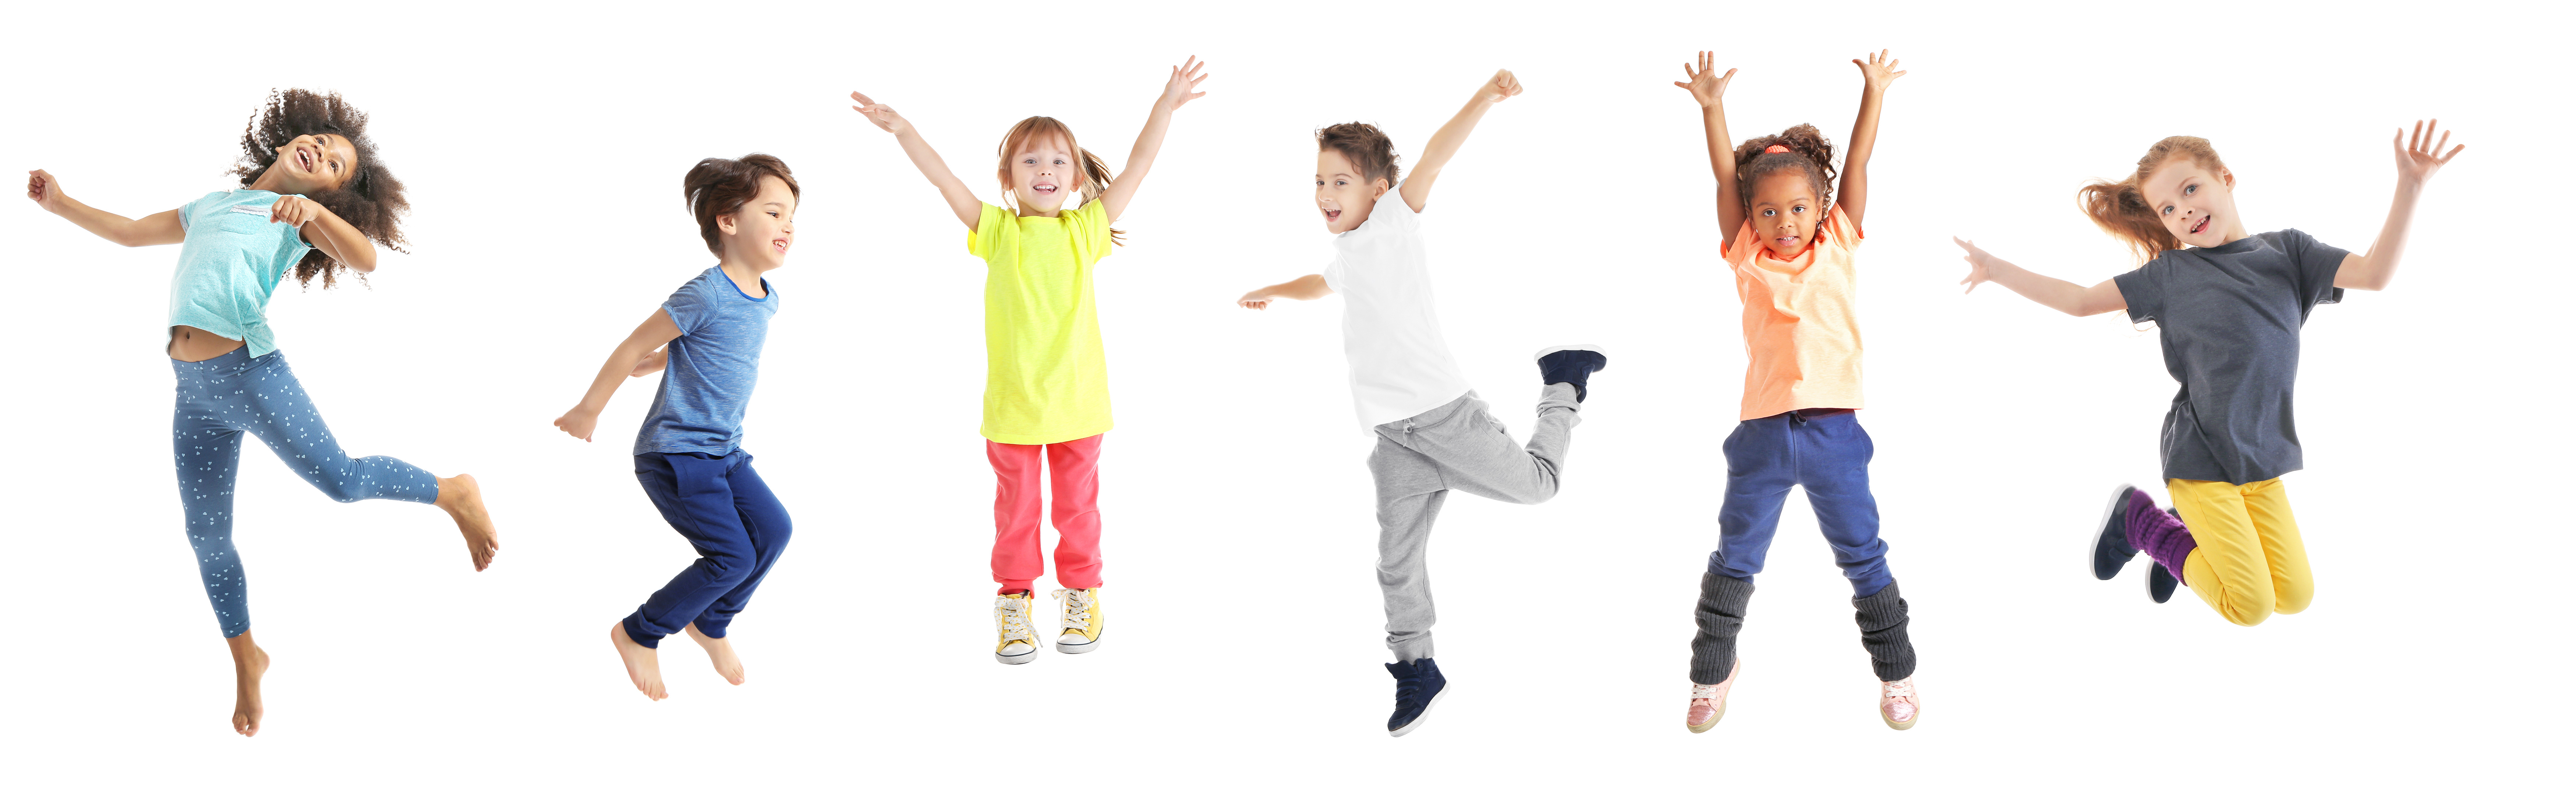 Collage of jumping schoolchildren on white background